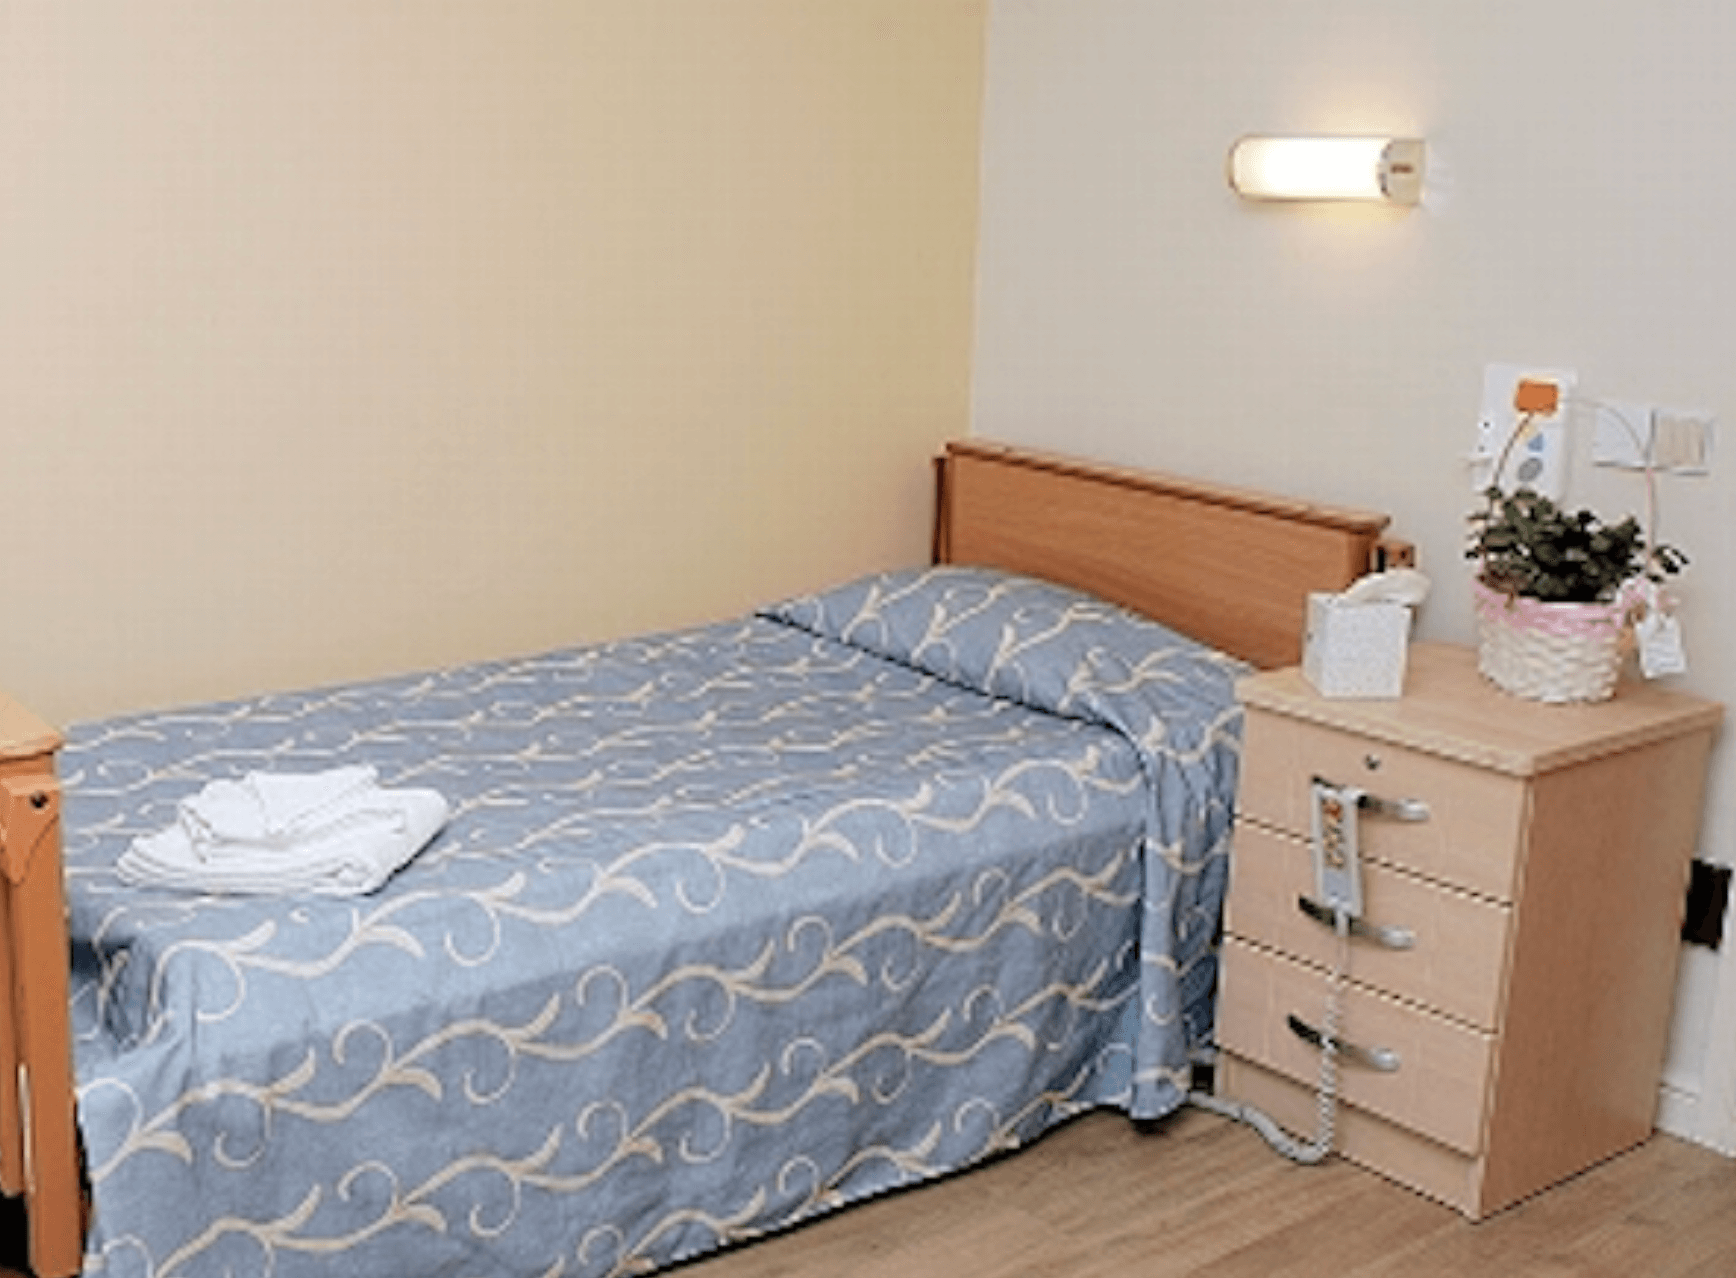 Bedroom of Braemount care home in Paisley, Scotland